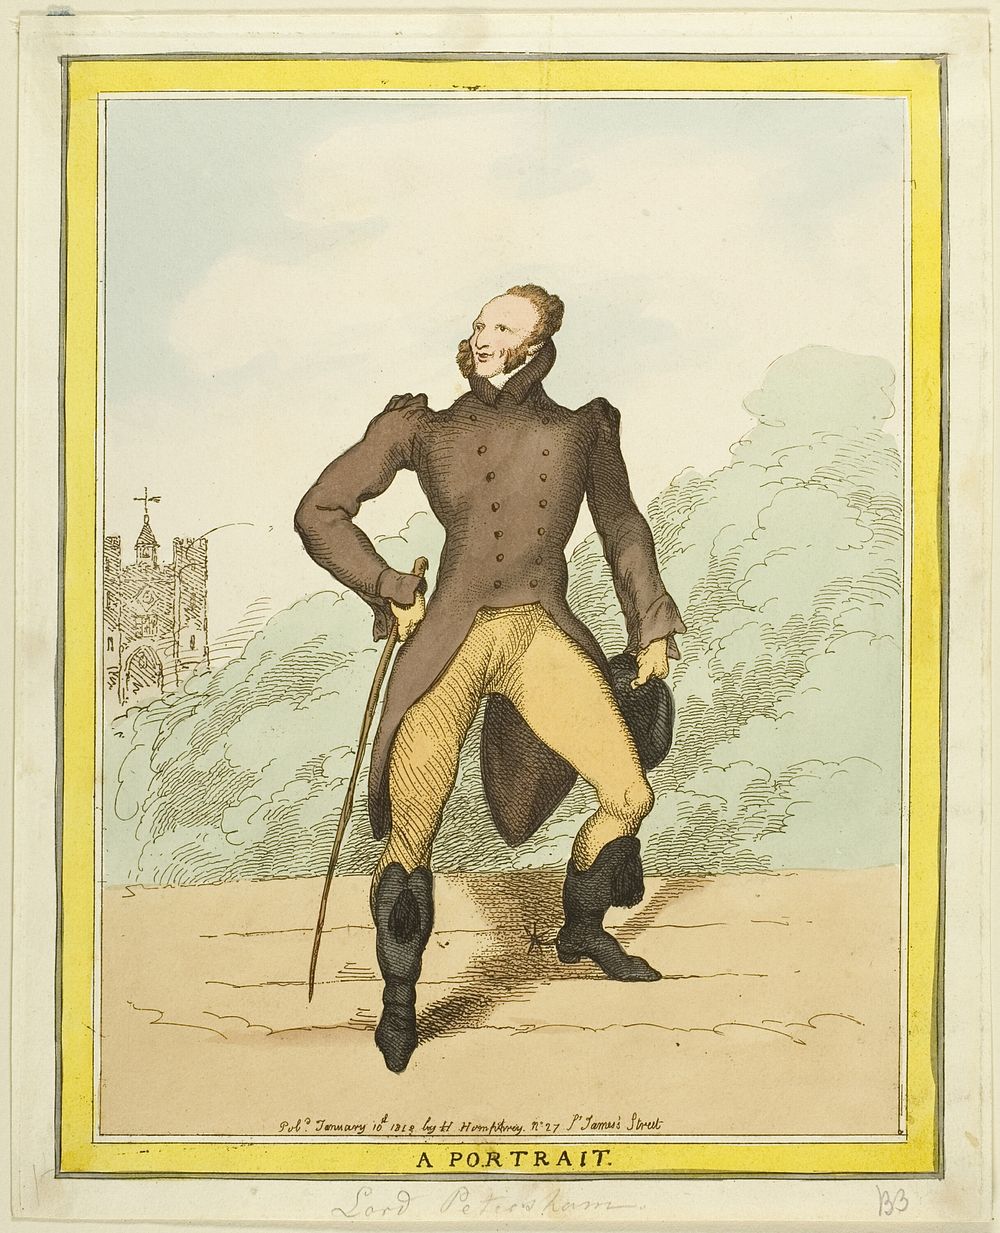 A Portrait: Lord Petersham by Thomas Rowlandson